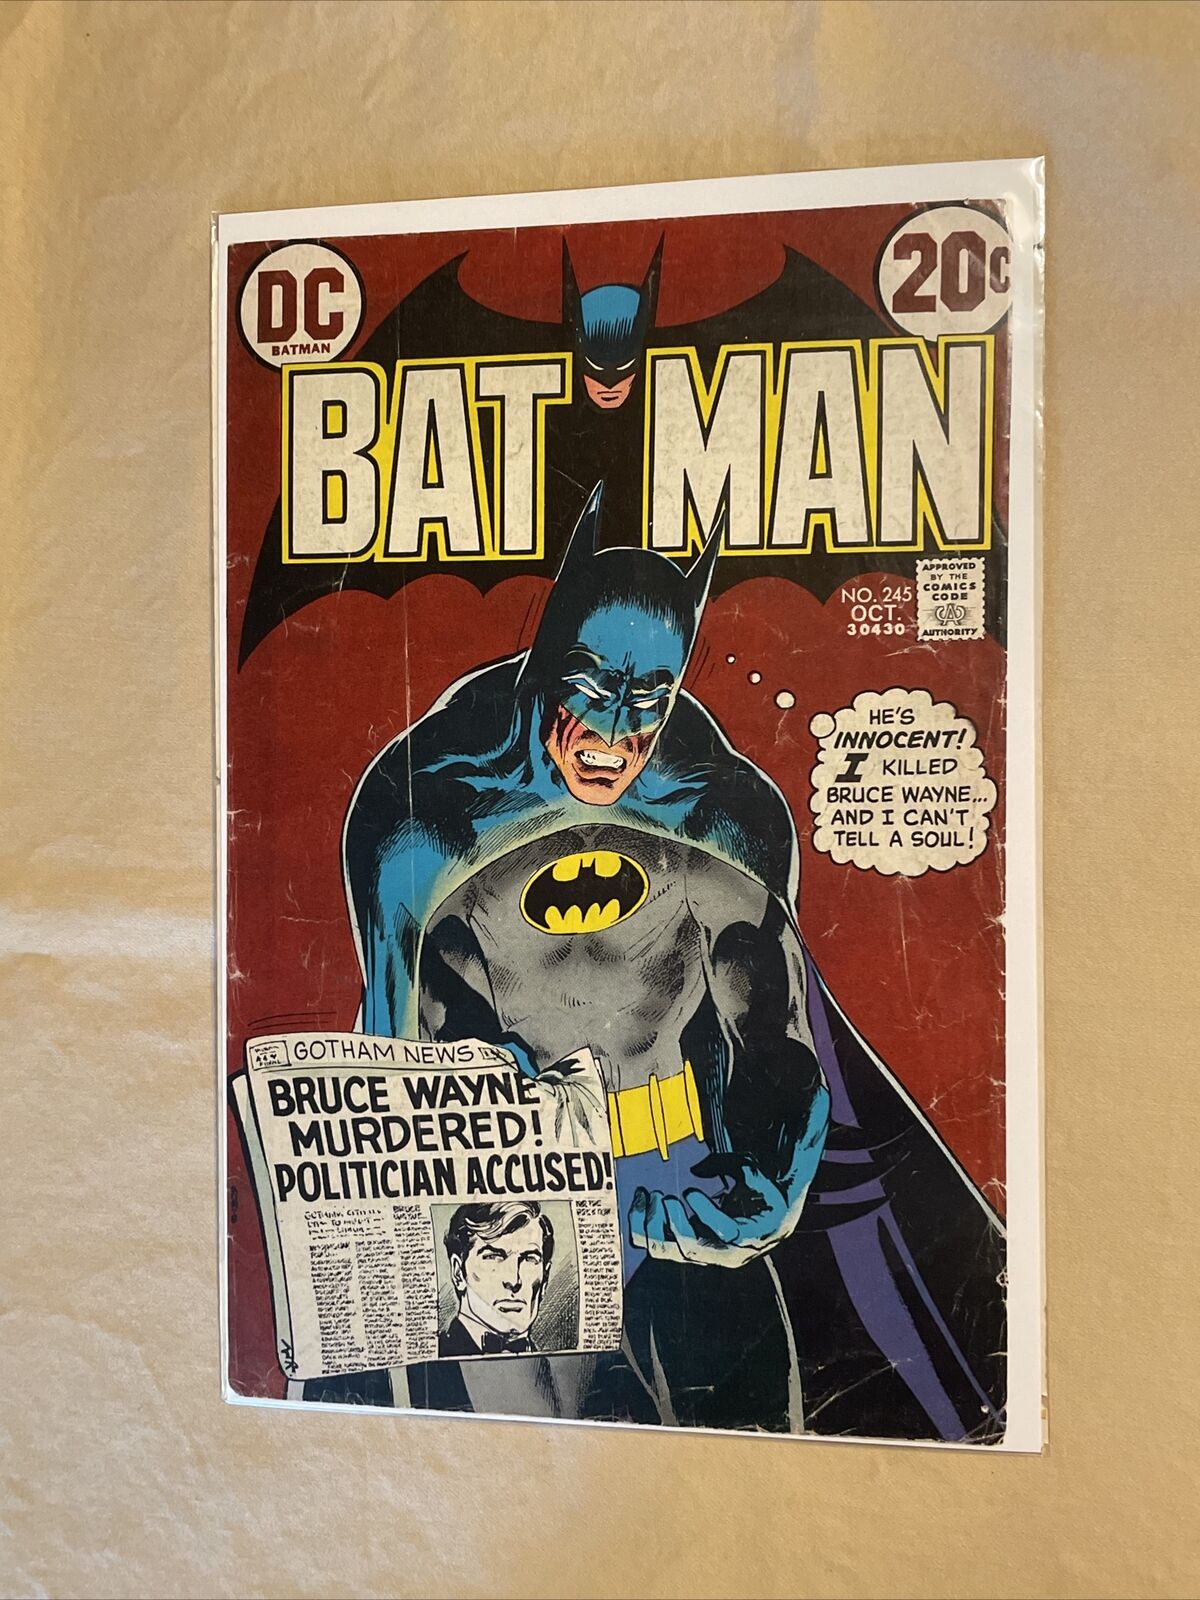 **COVER ONLY** VINTAGE COMIC DC Batman No. #245 Oct 20¢ Bruce Wayne Newspaper 